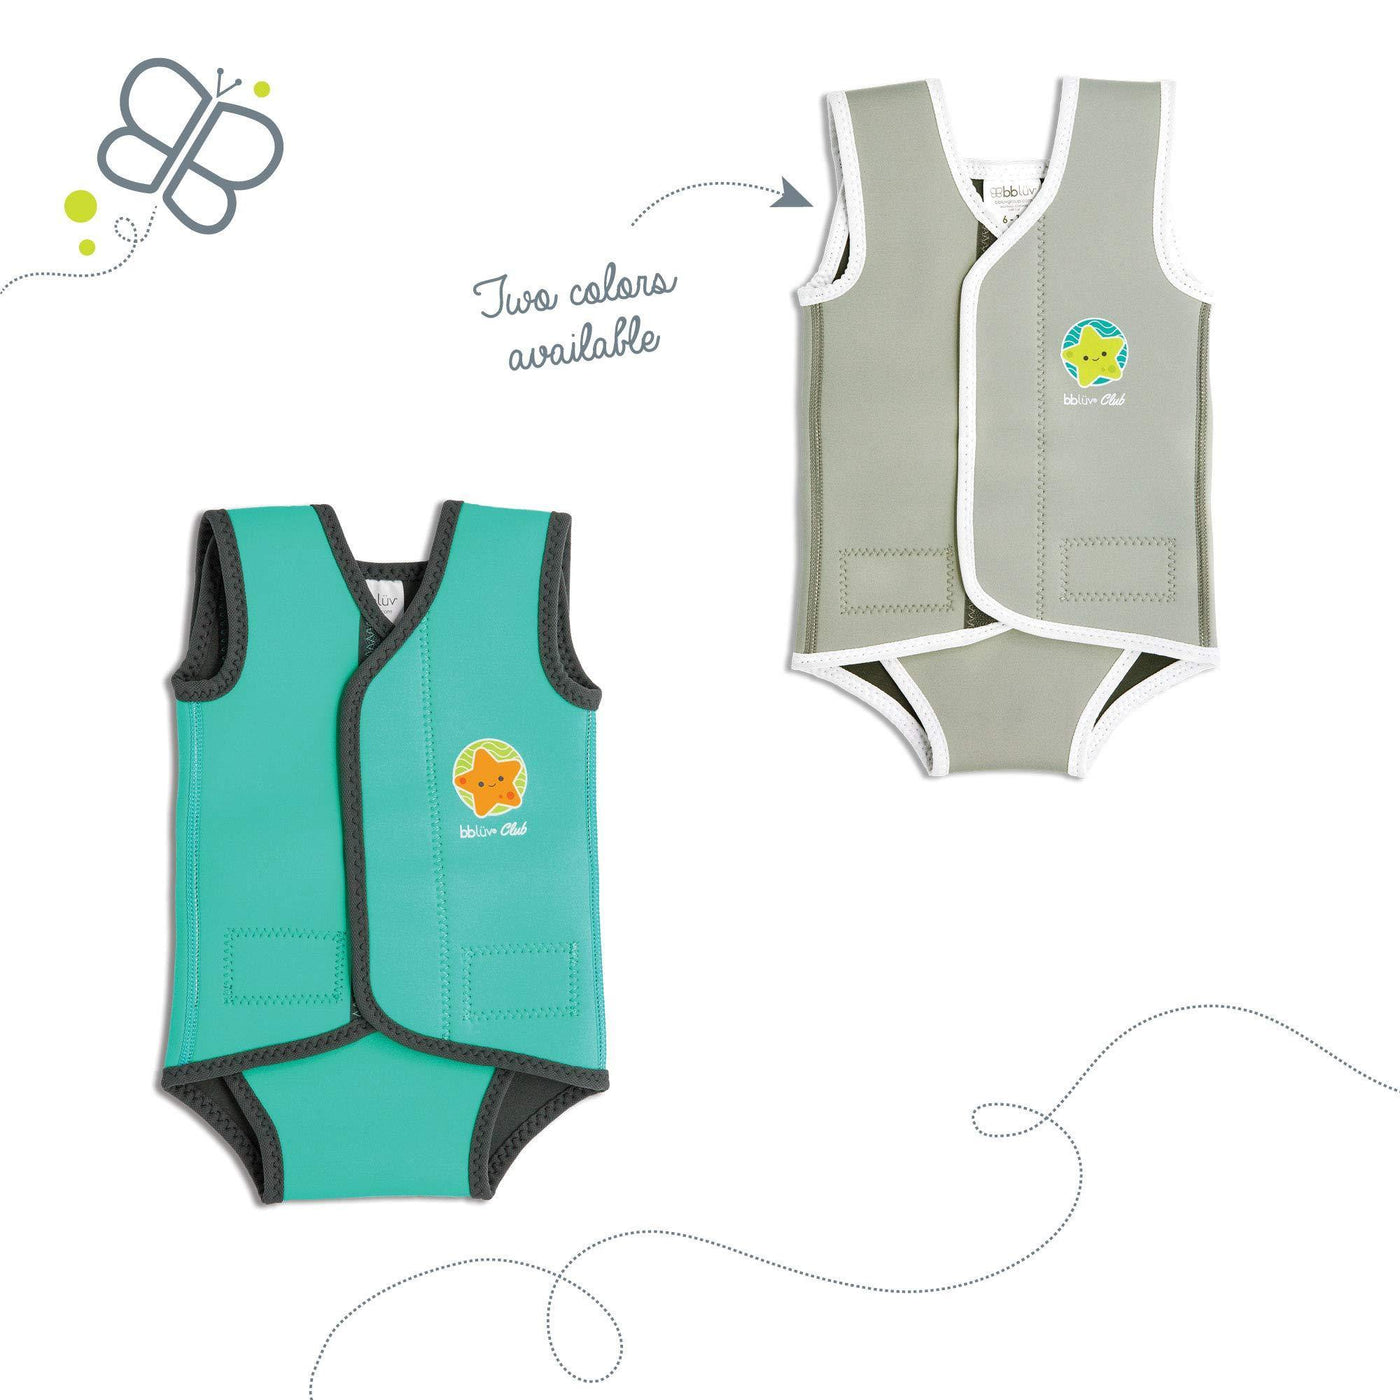 bblüv - Wrap - Warm Neoprene Wetsuit for Baby and Infants (Aqua) - 